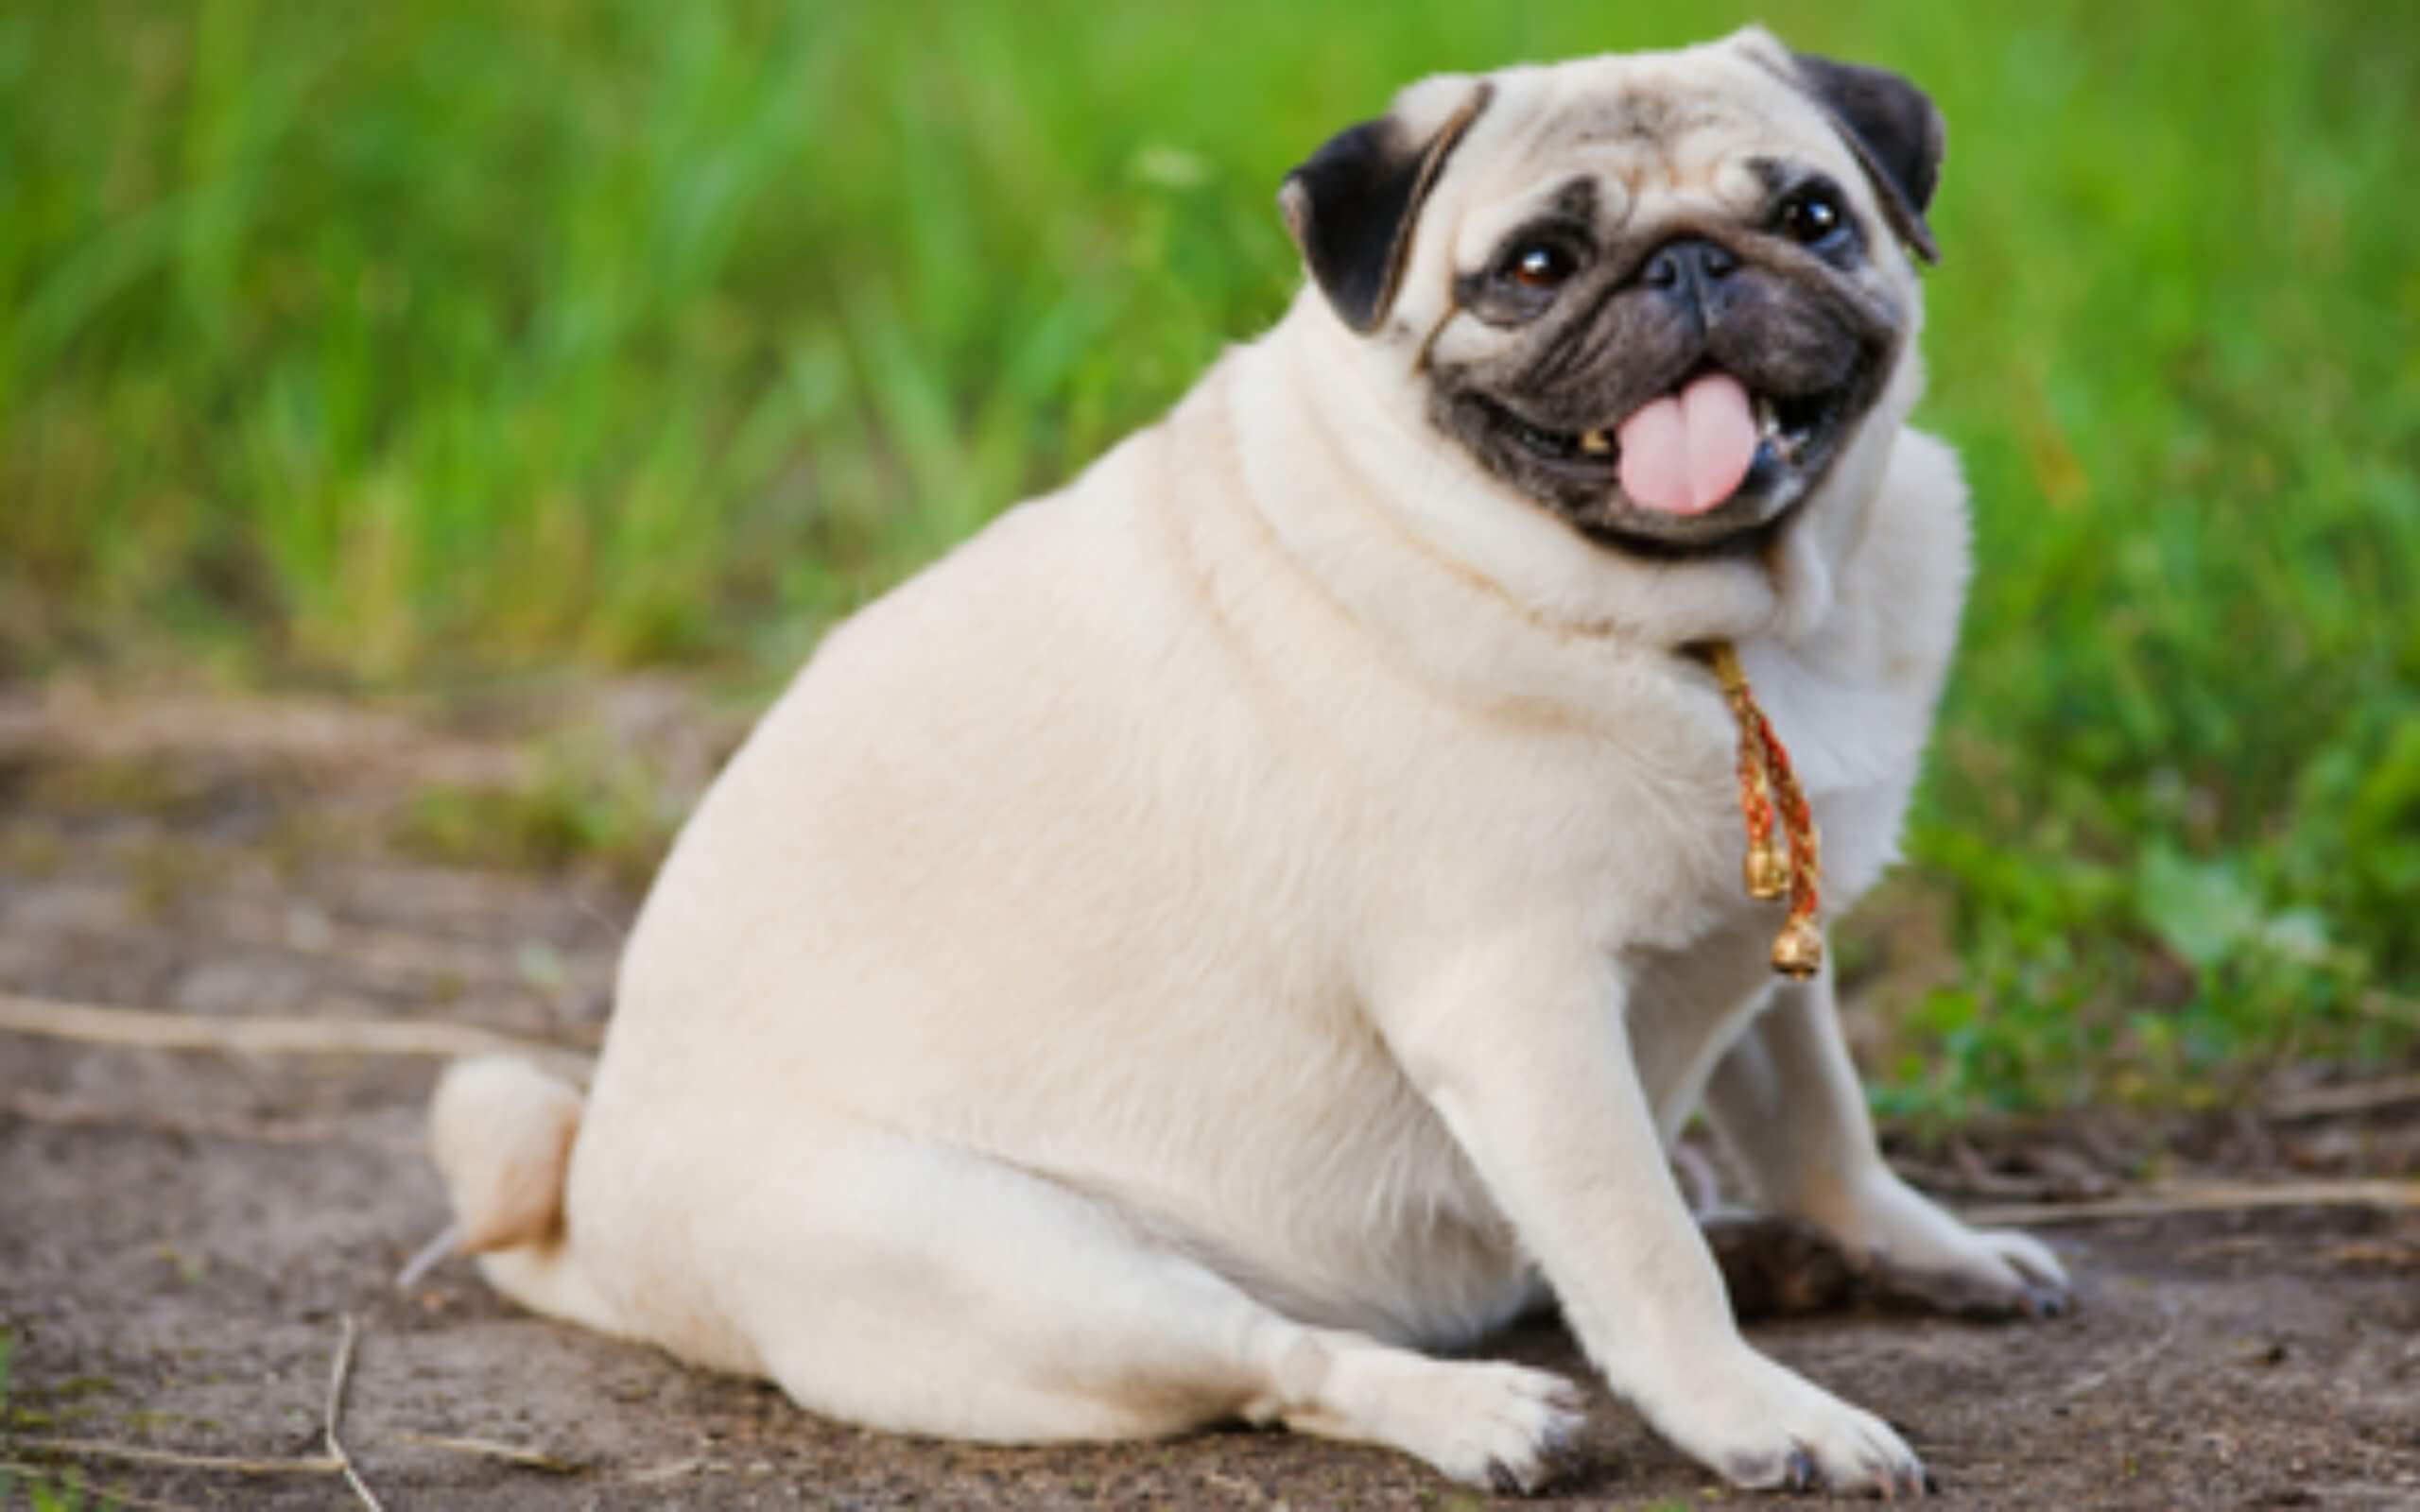 How to avoid dog obesity